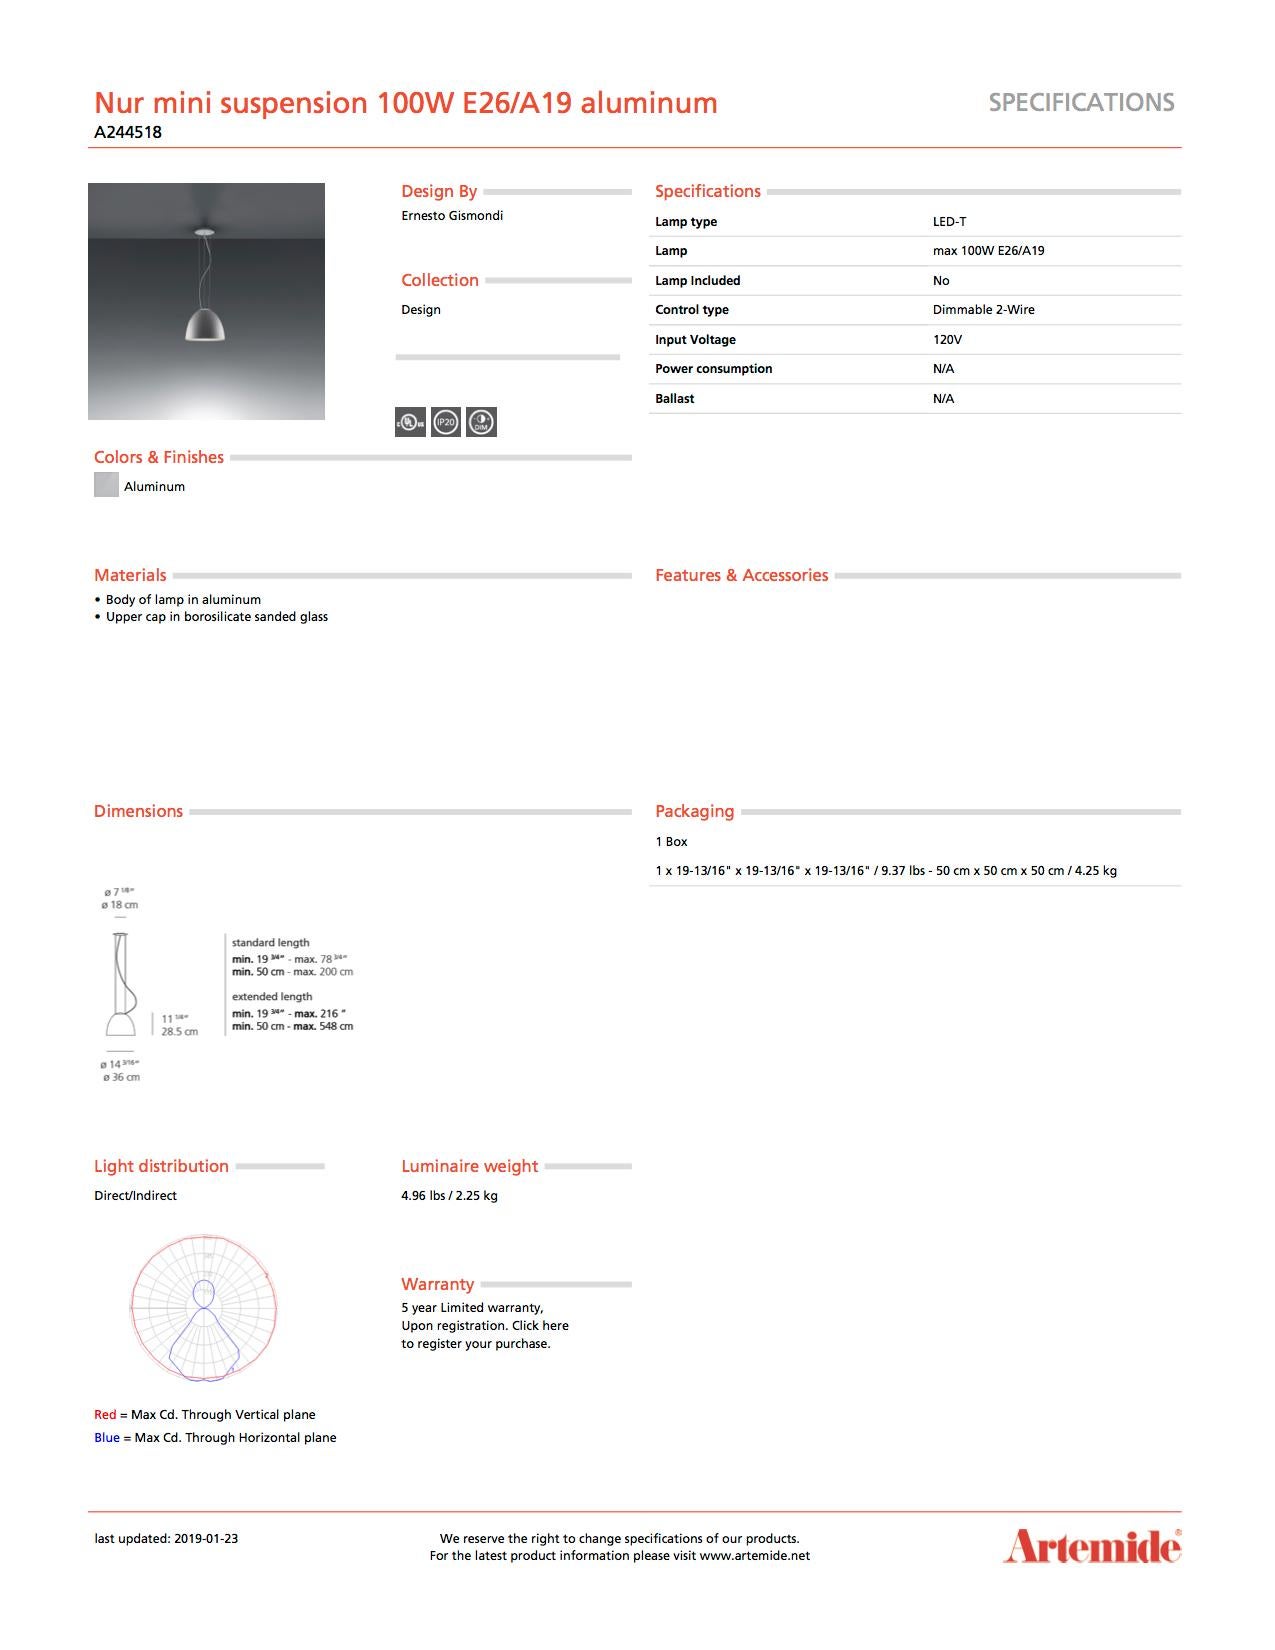 Italian Artemide Nur Mini Suspension Light 100W E26/A19 in Aluminum For Sale